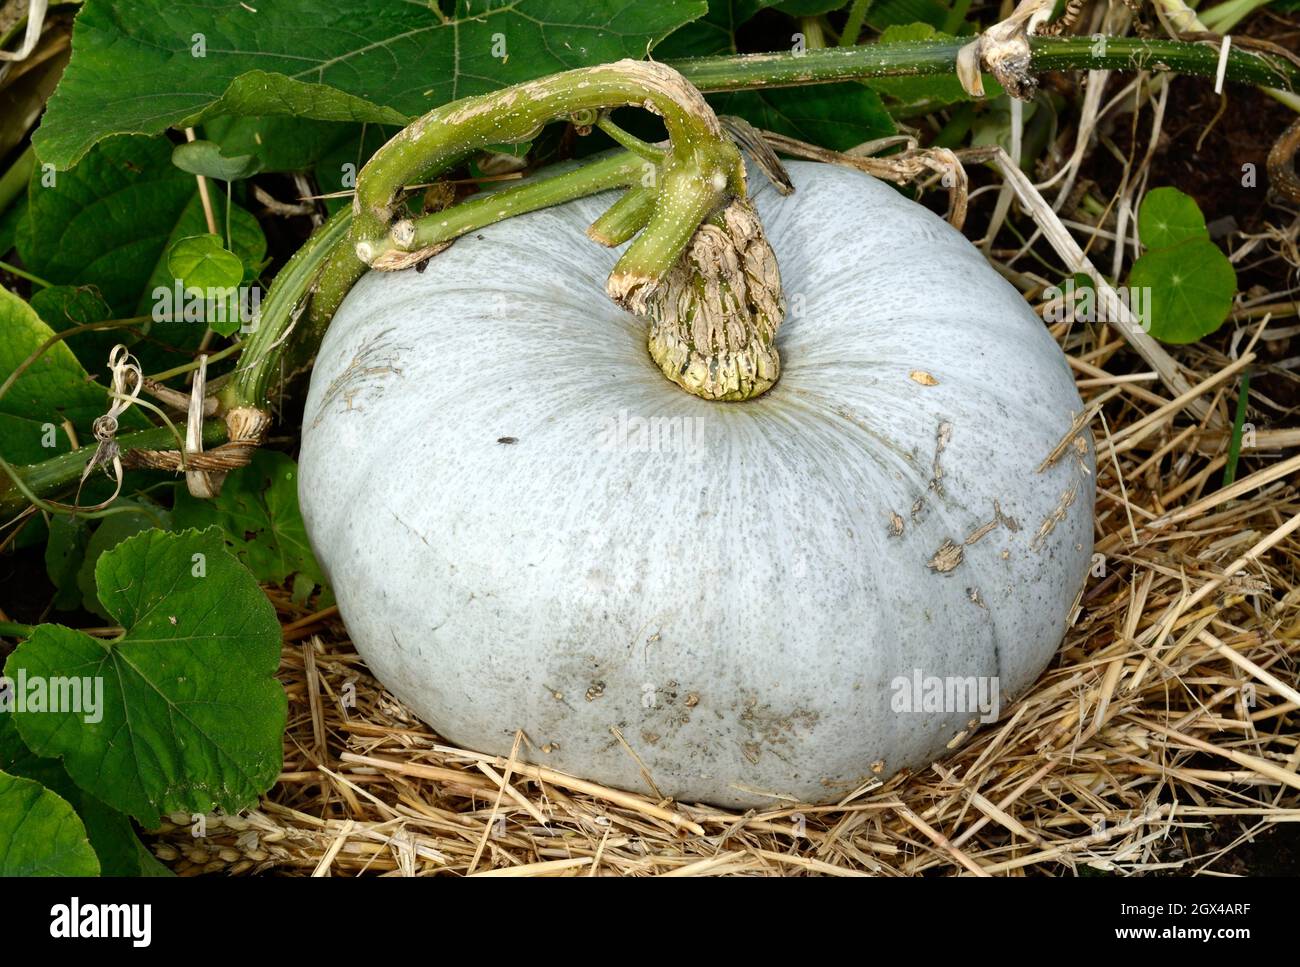 Blue hungarian pumpkin -Fotos und -Bildmaterial in hoher Auflösung – Alamy